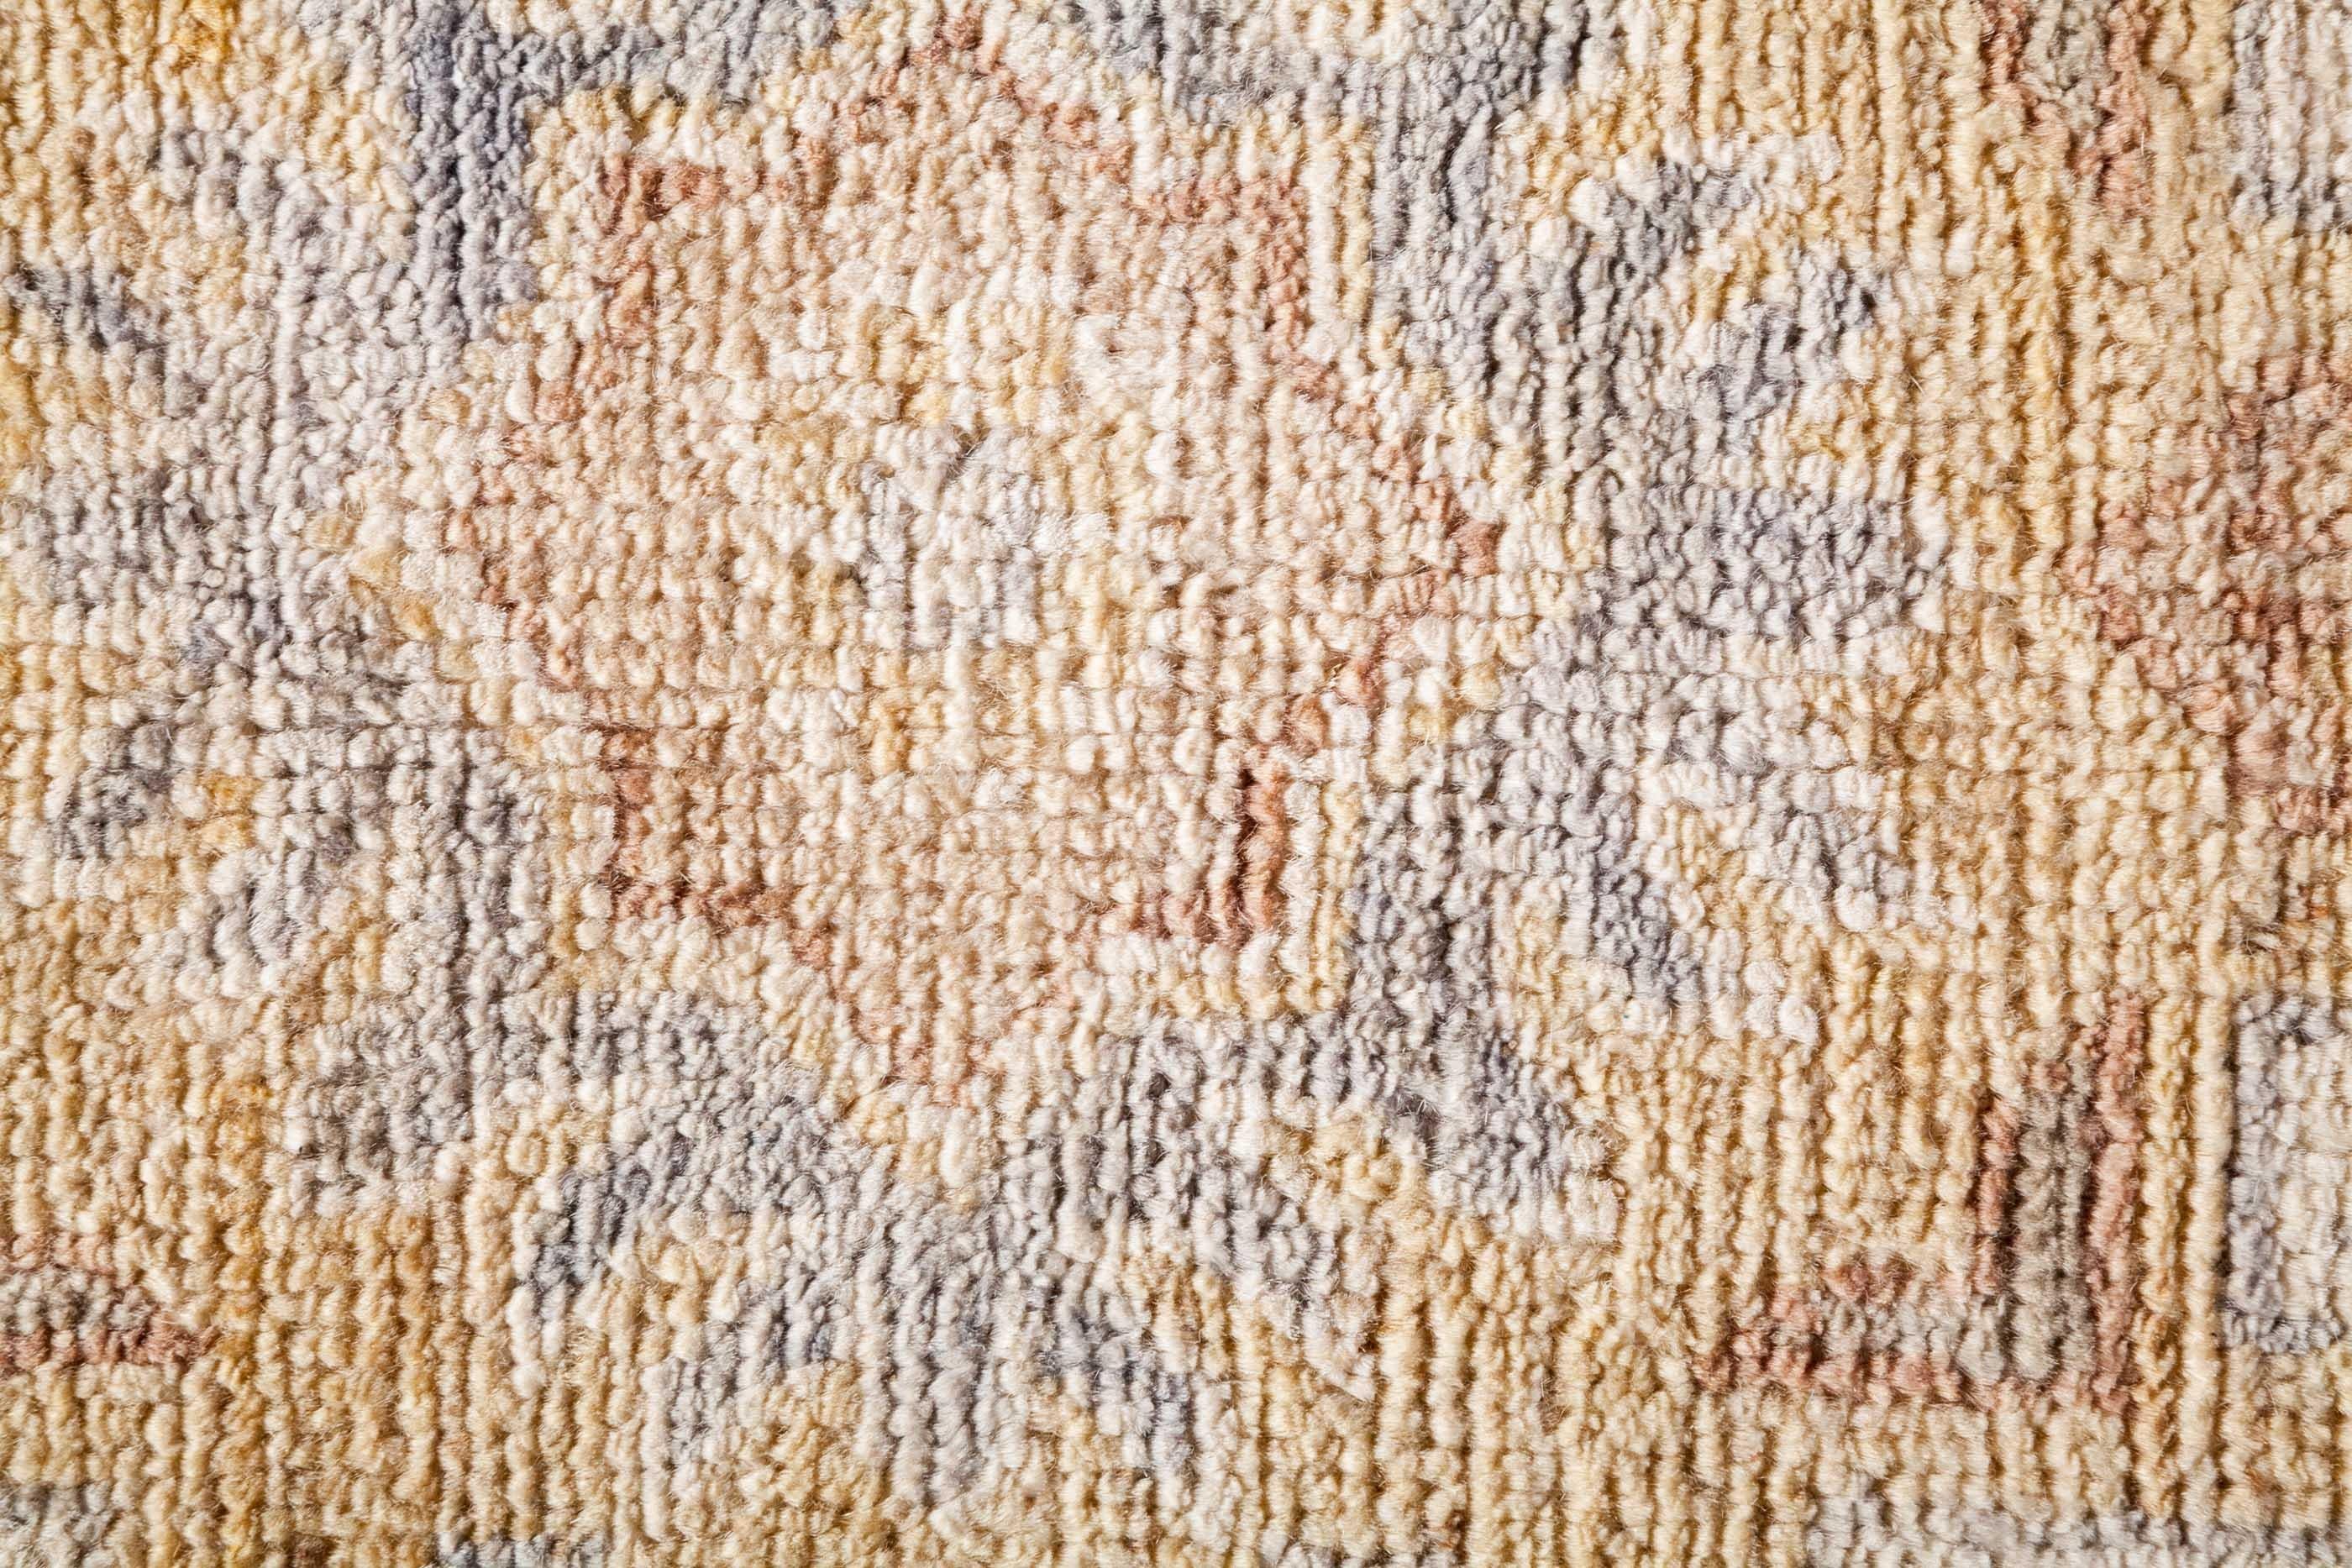 Pakistani One-of-a-Kind Oriental Khotan Wool Hand-Knotted Area Rug, Cream, 8' 10 x 12